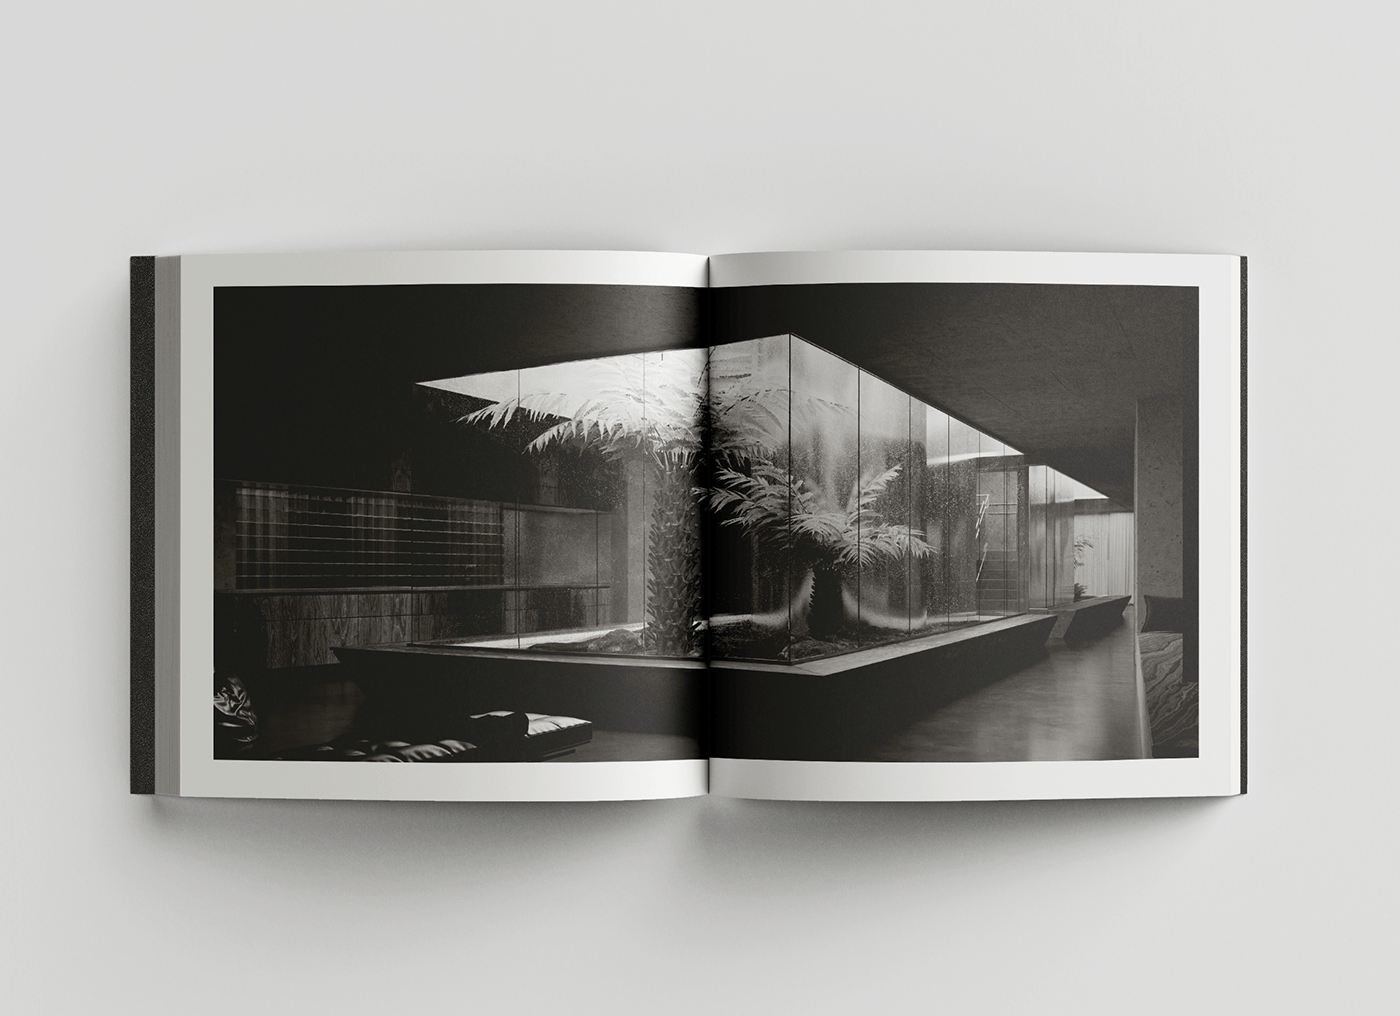 design portfolio architecture archviz visualization book InDesign Layout minimalist Classic